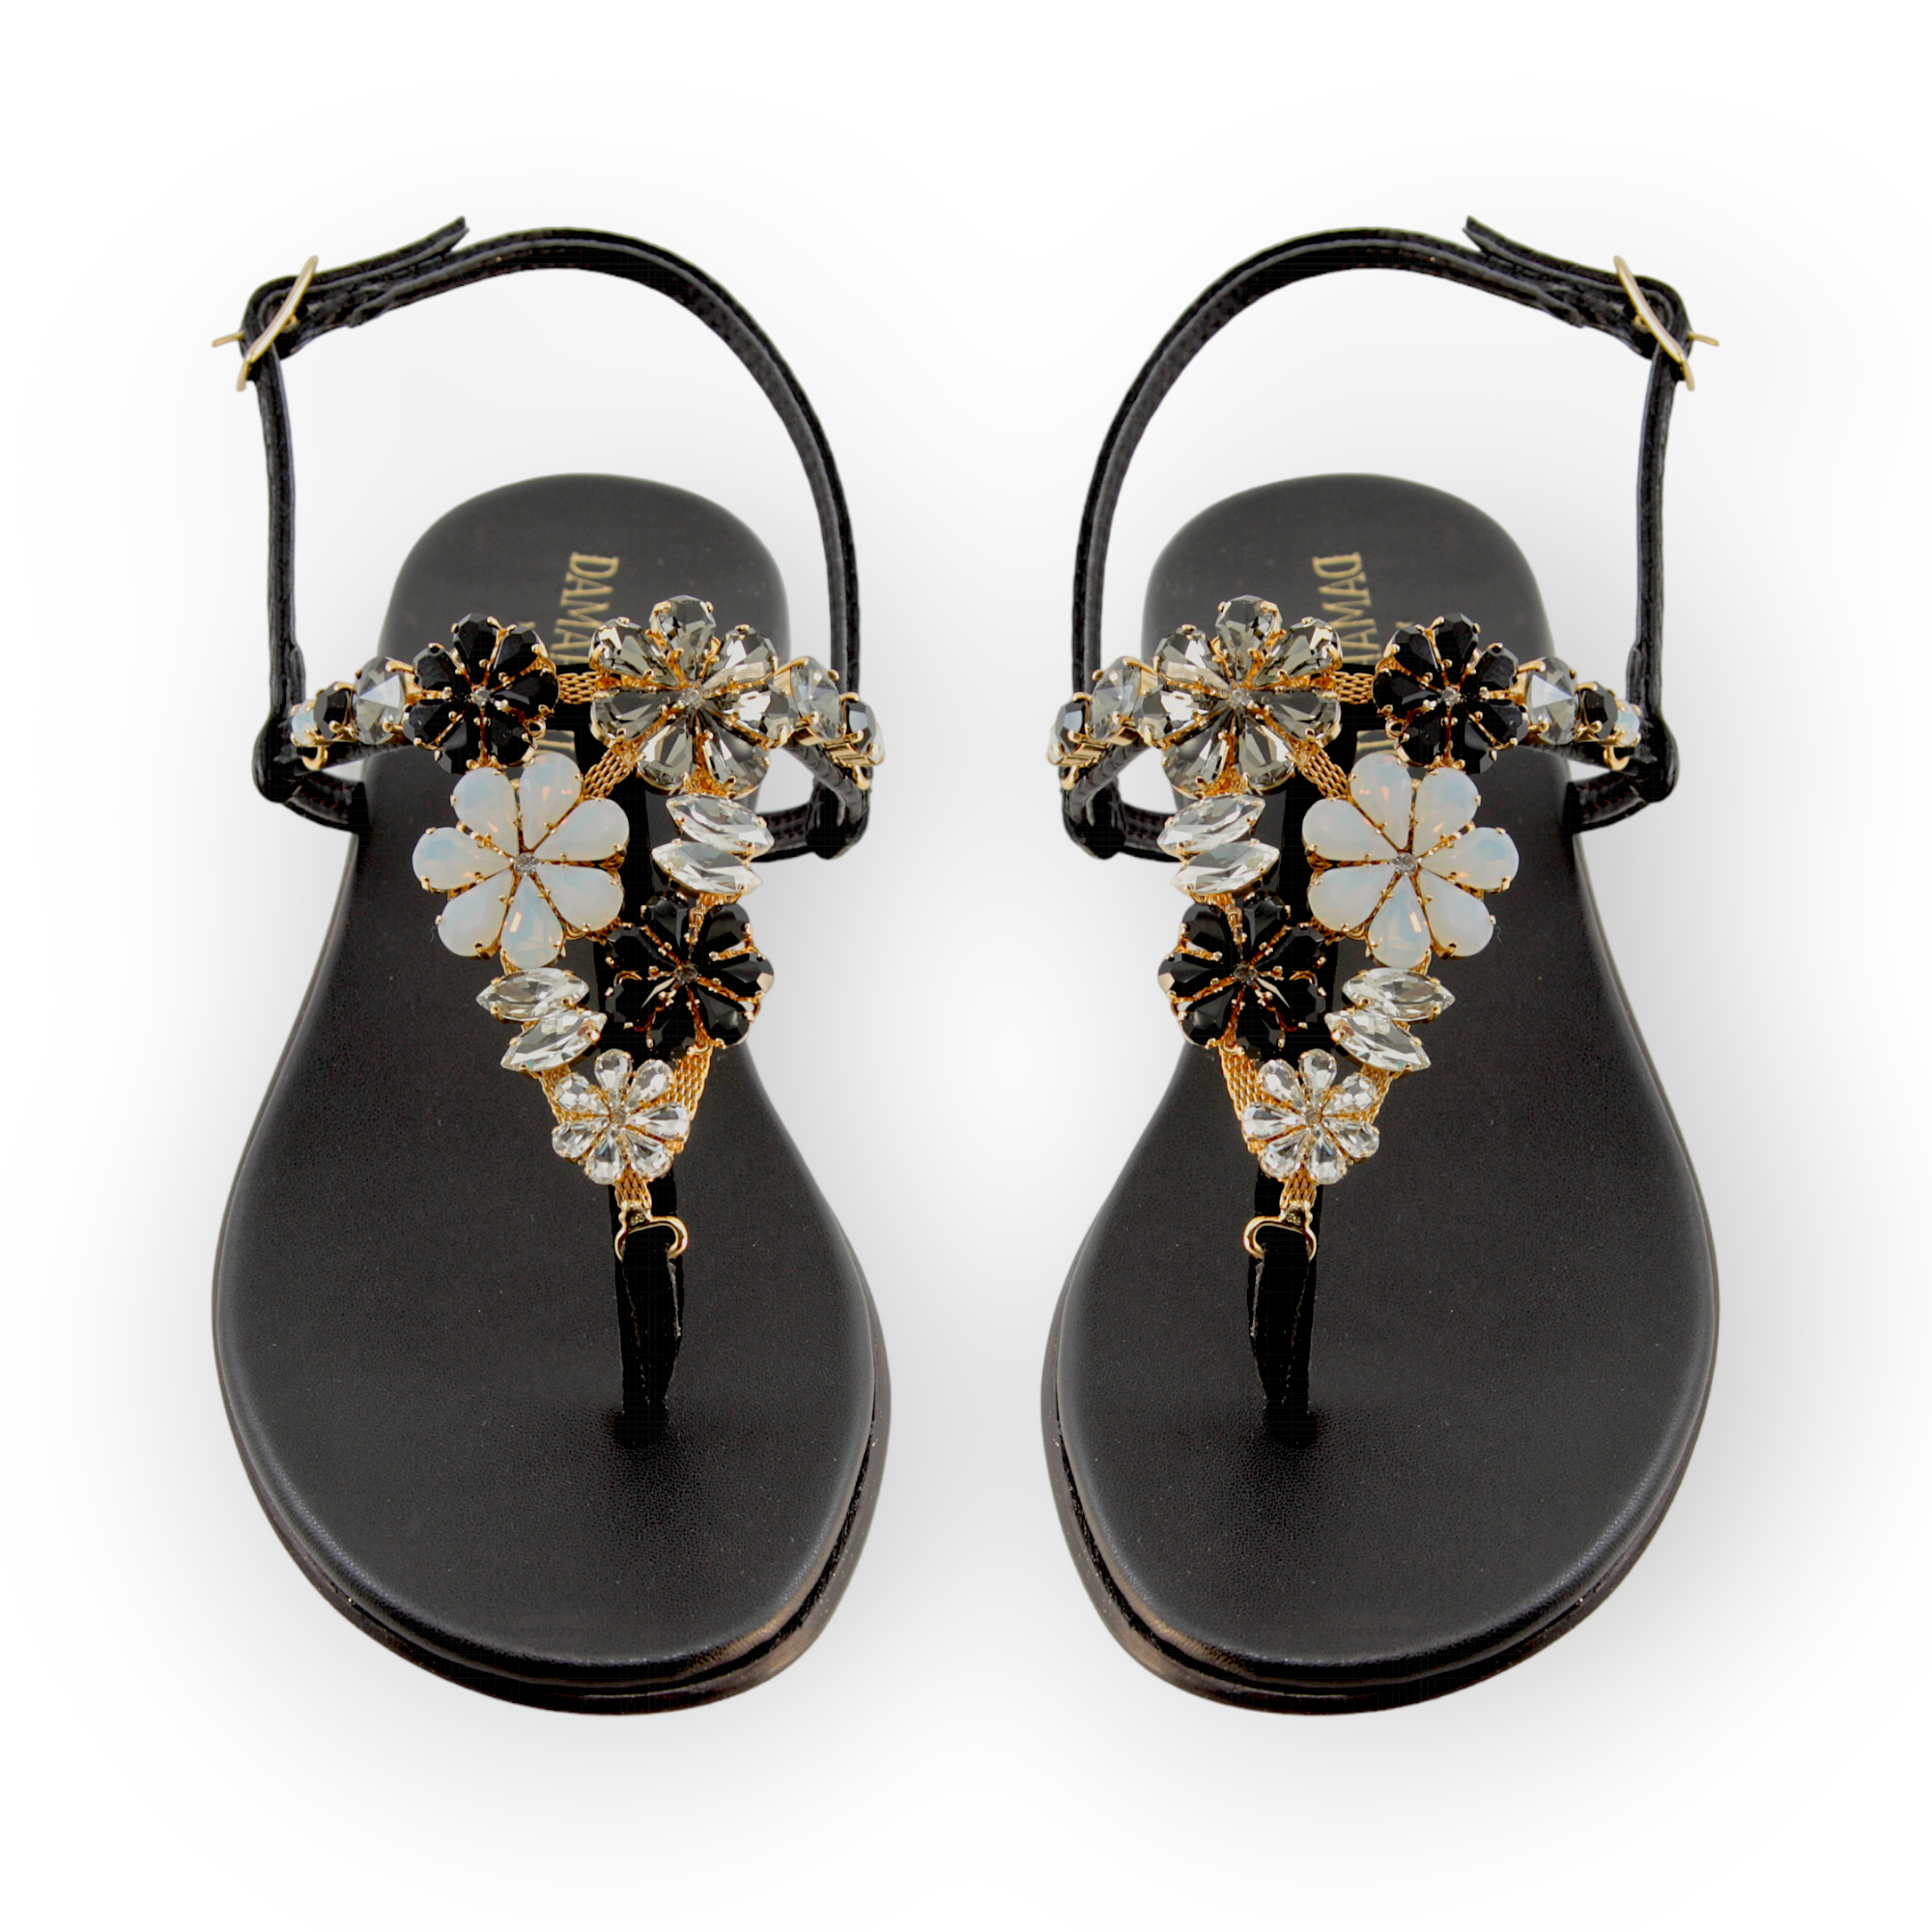 Gilda Black Sandals With Crystals.